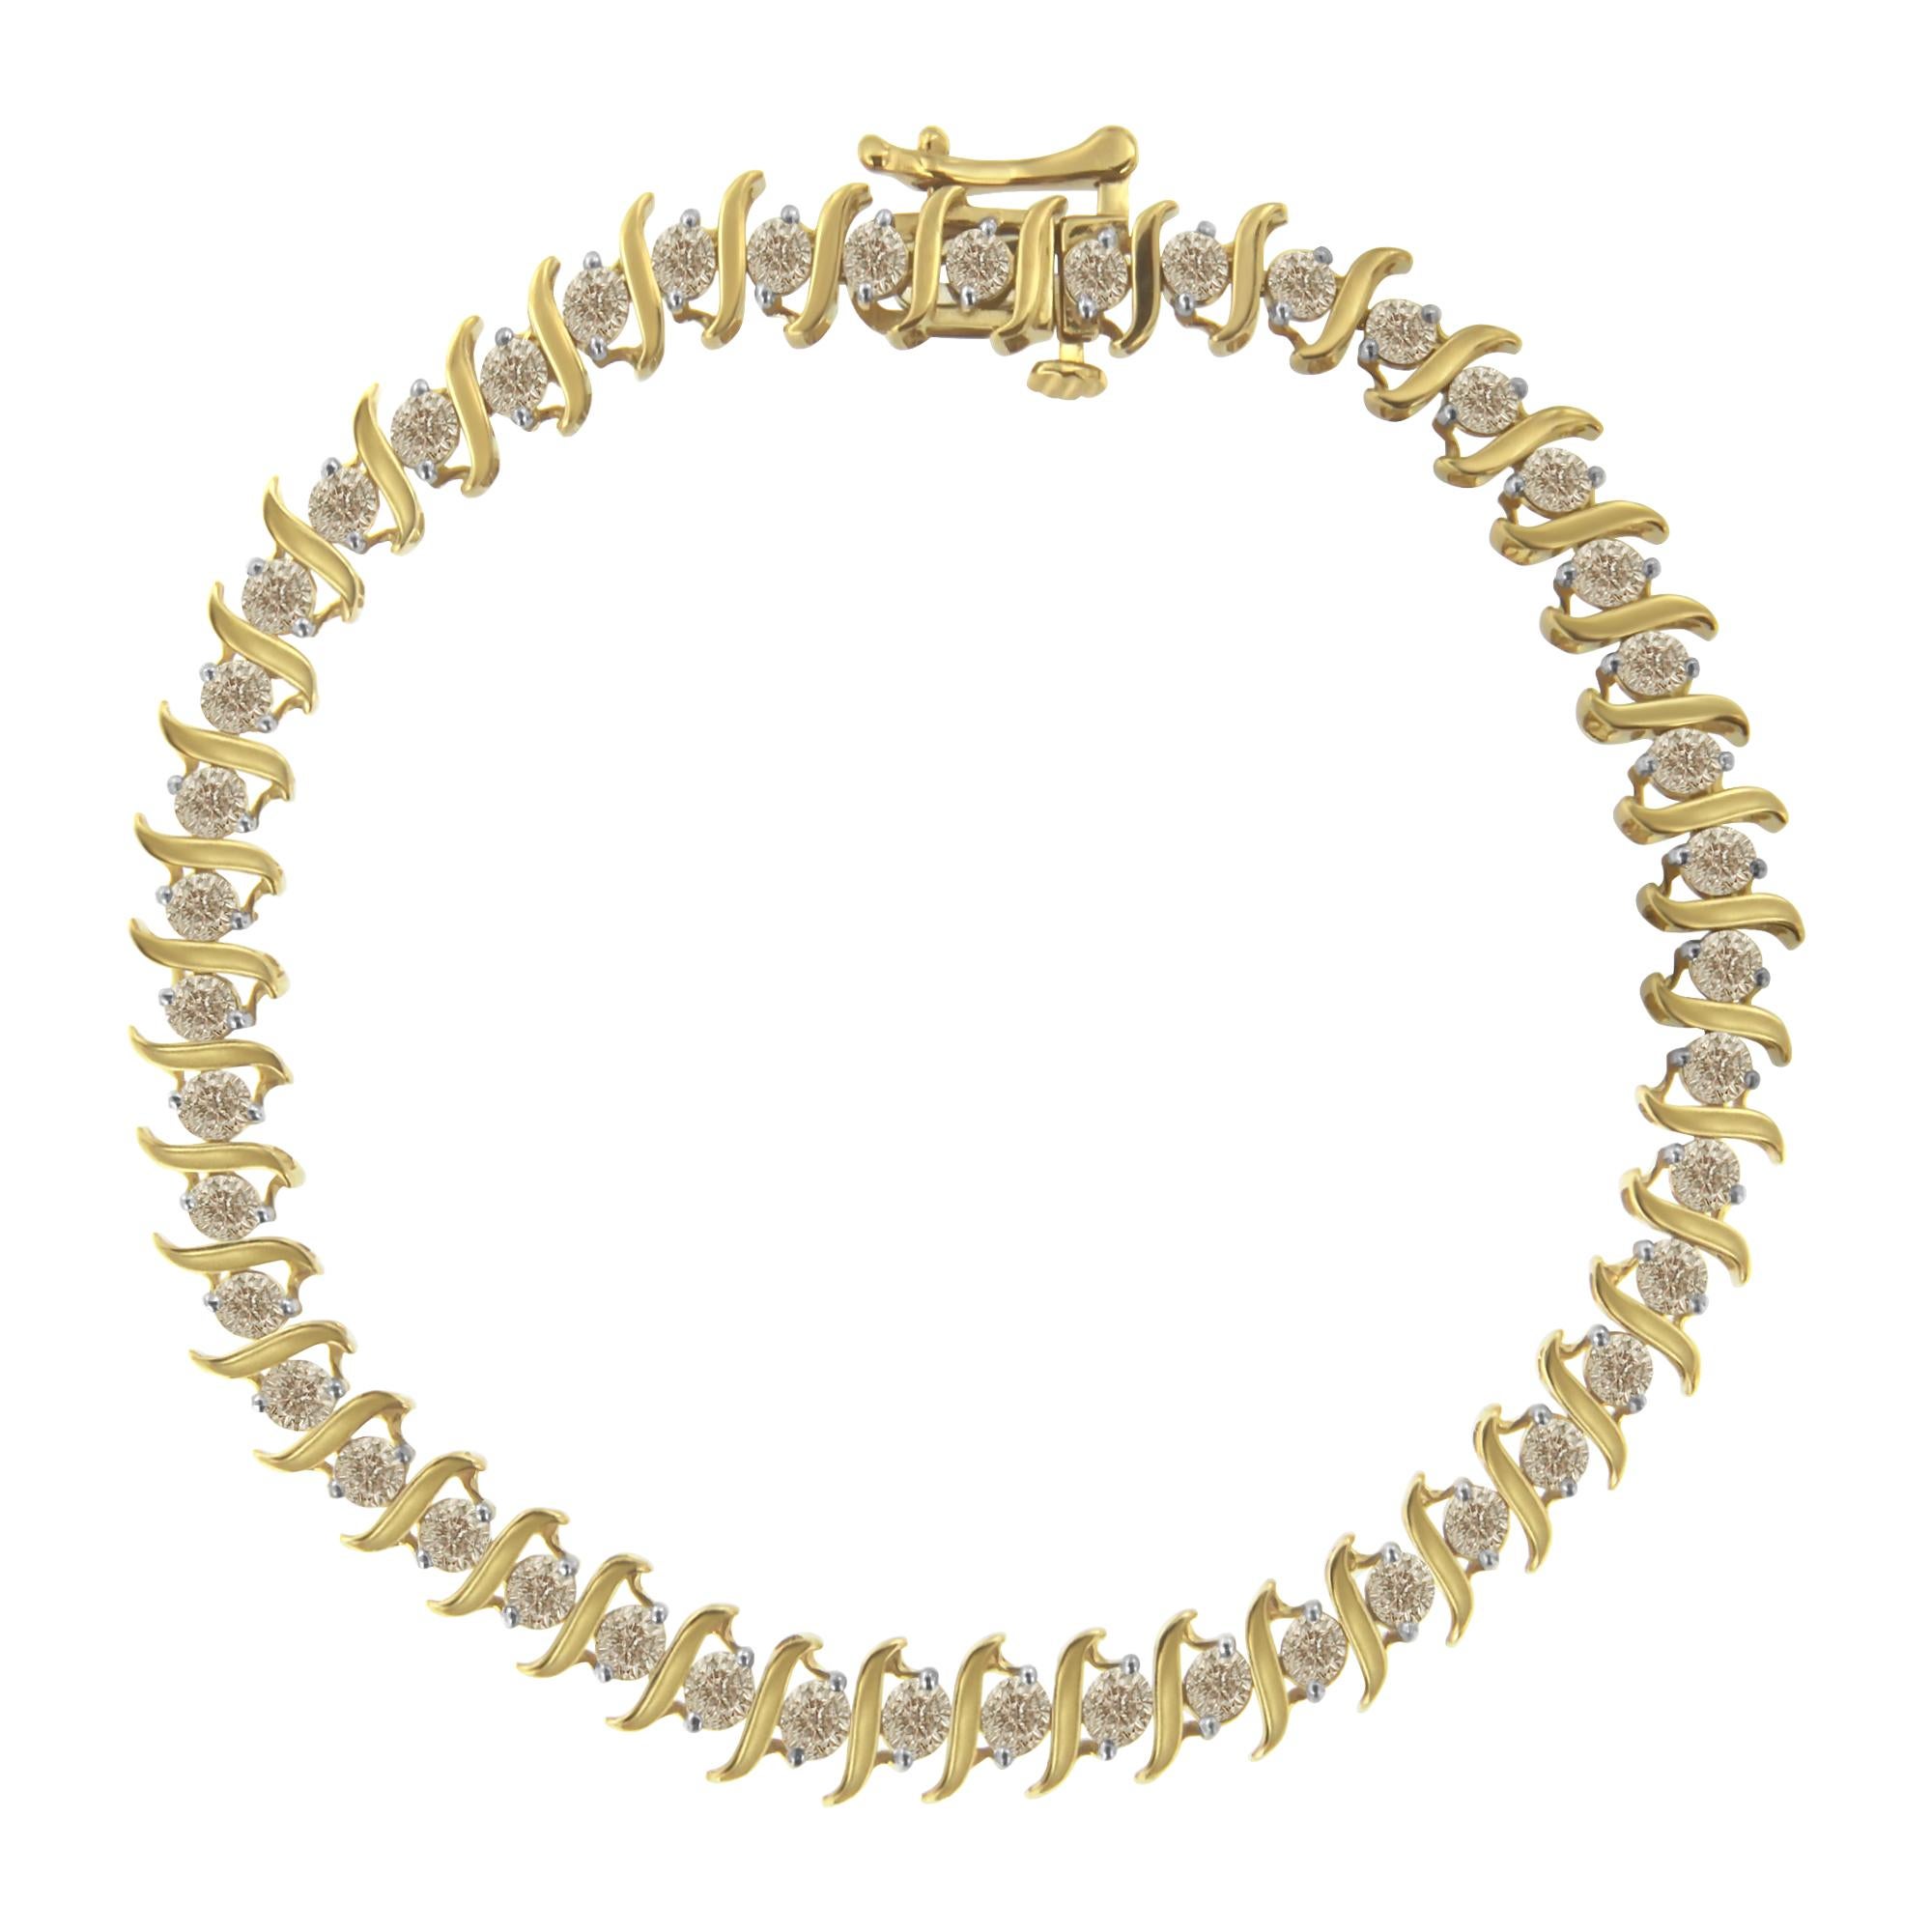 10KT Yellow Gold 3.0 Carat Diamond S-Link Bracelet (J-K Color, I2-I3 Clarity) For Sale